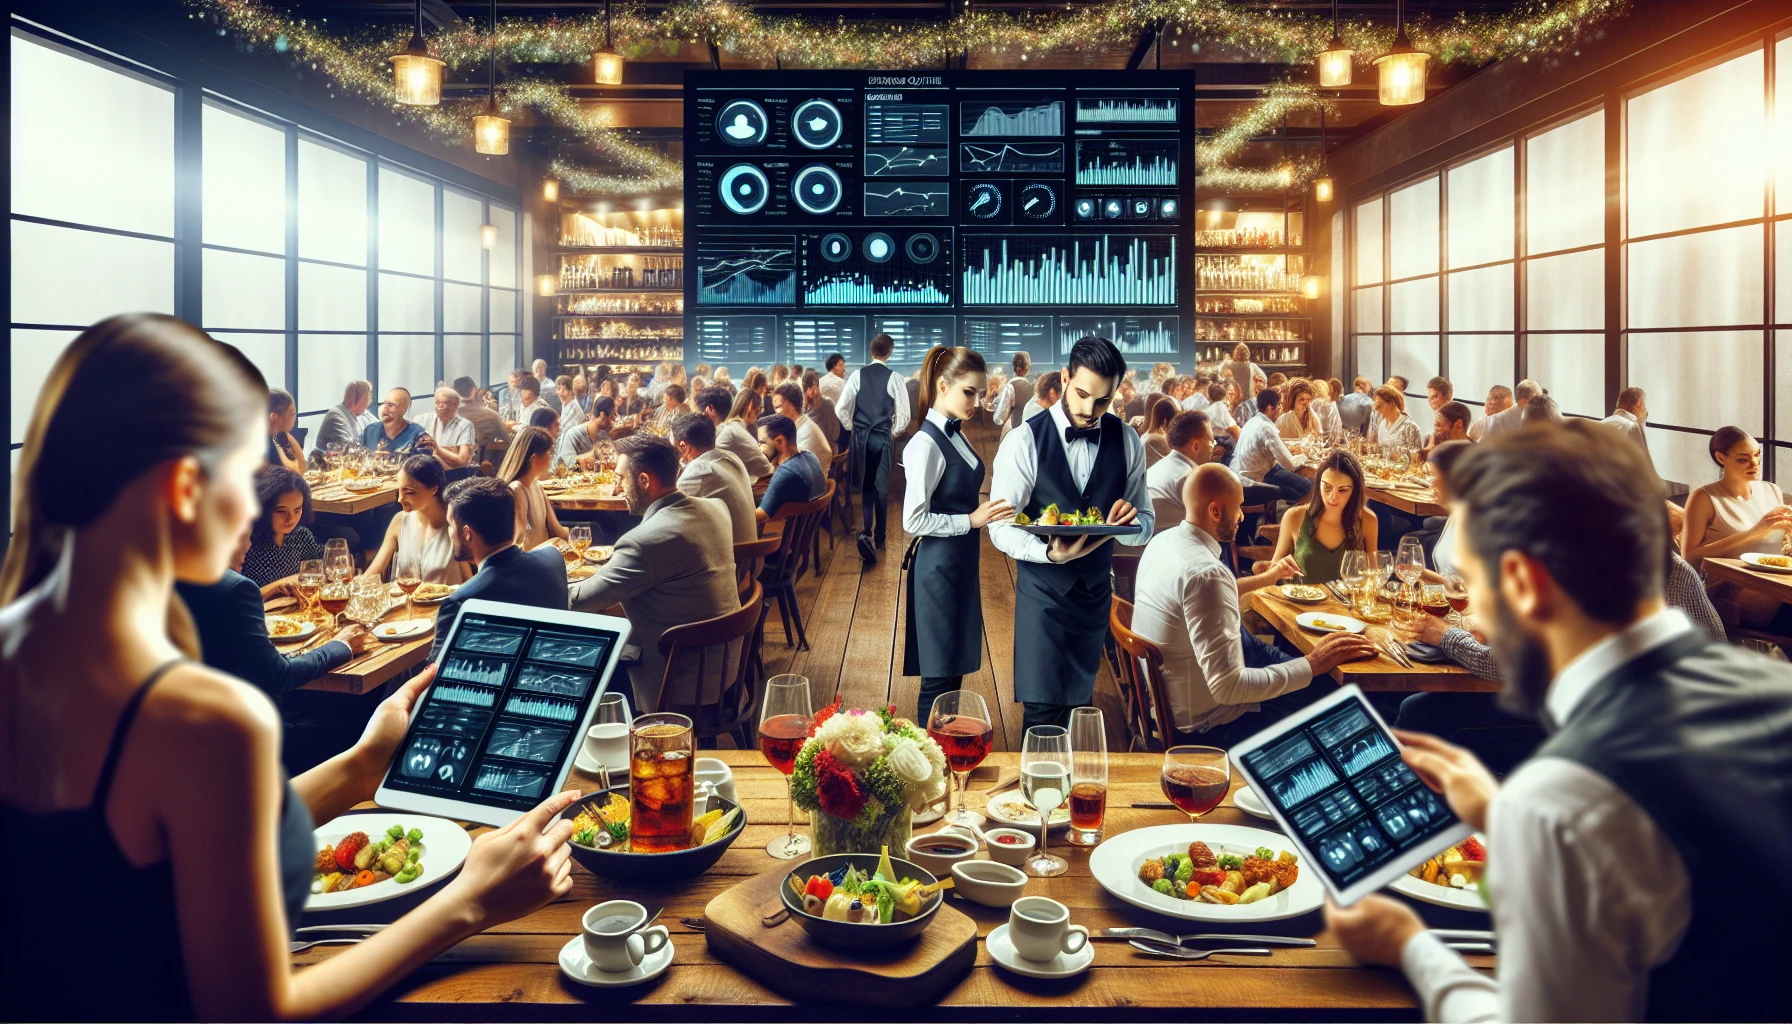 Restaurant management software solutions